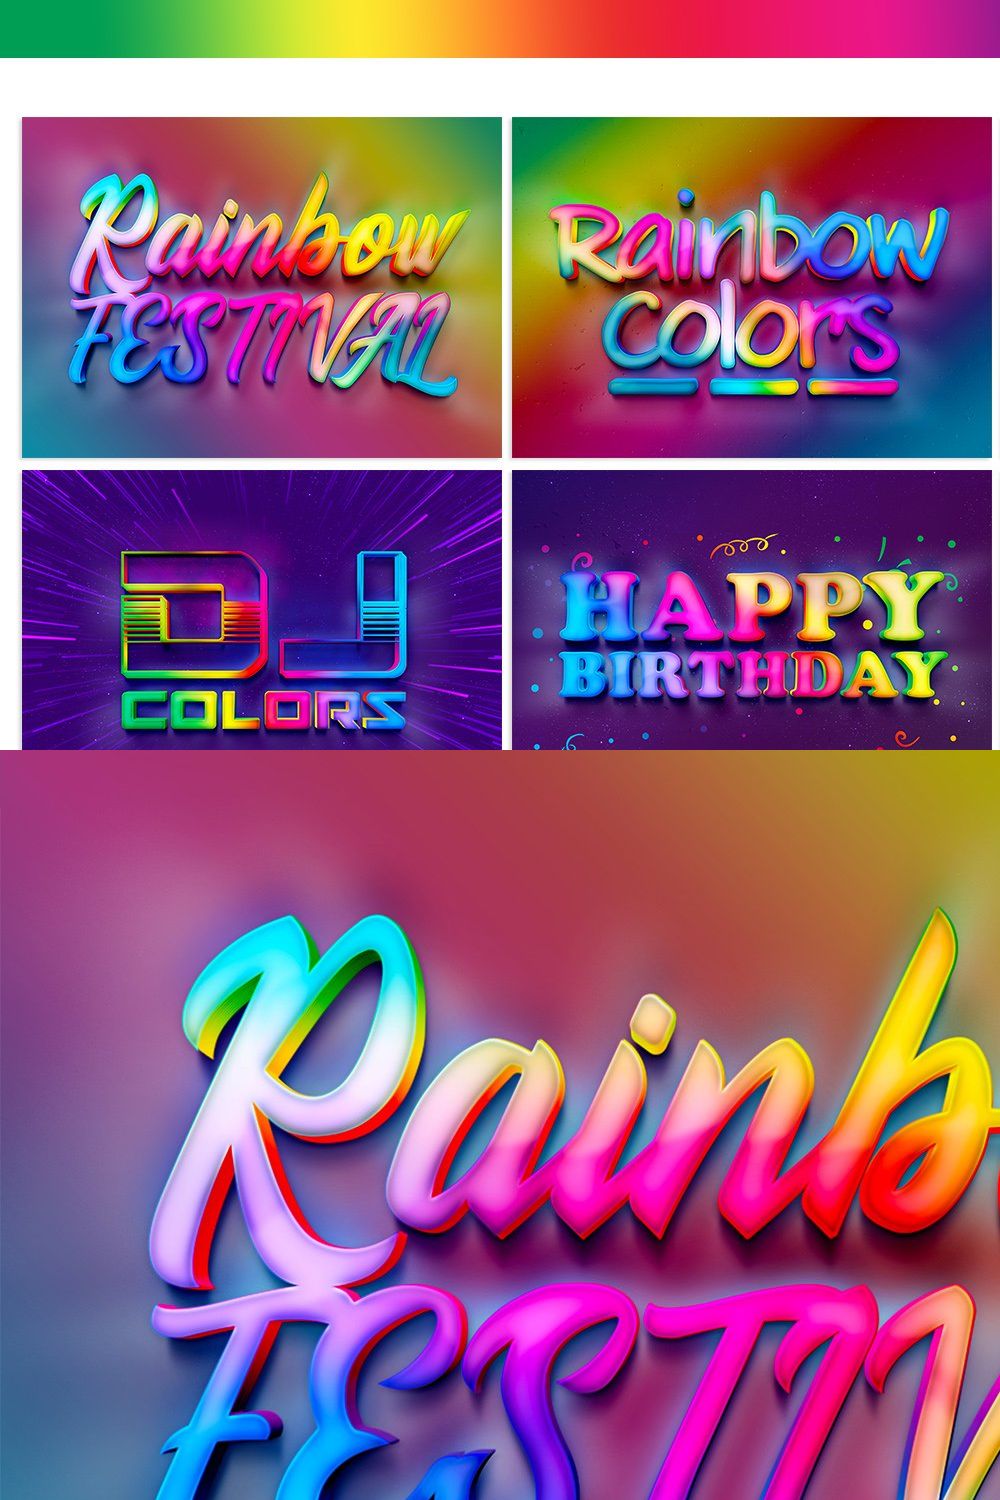 Rainbow Colors Photoshop Text Effect pinterest preview image.